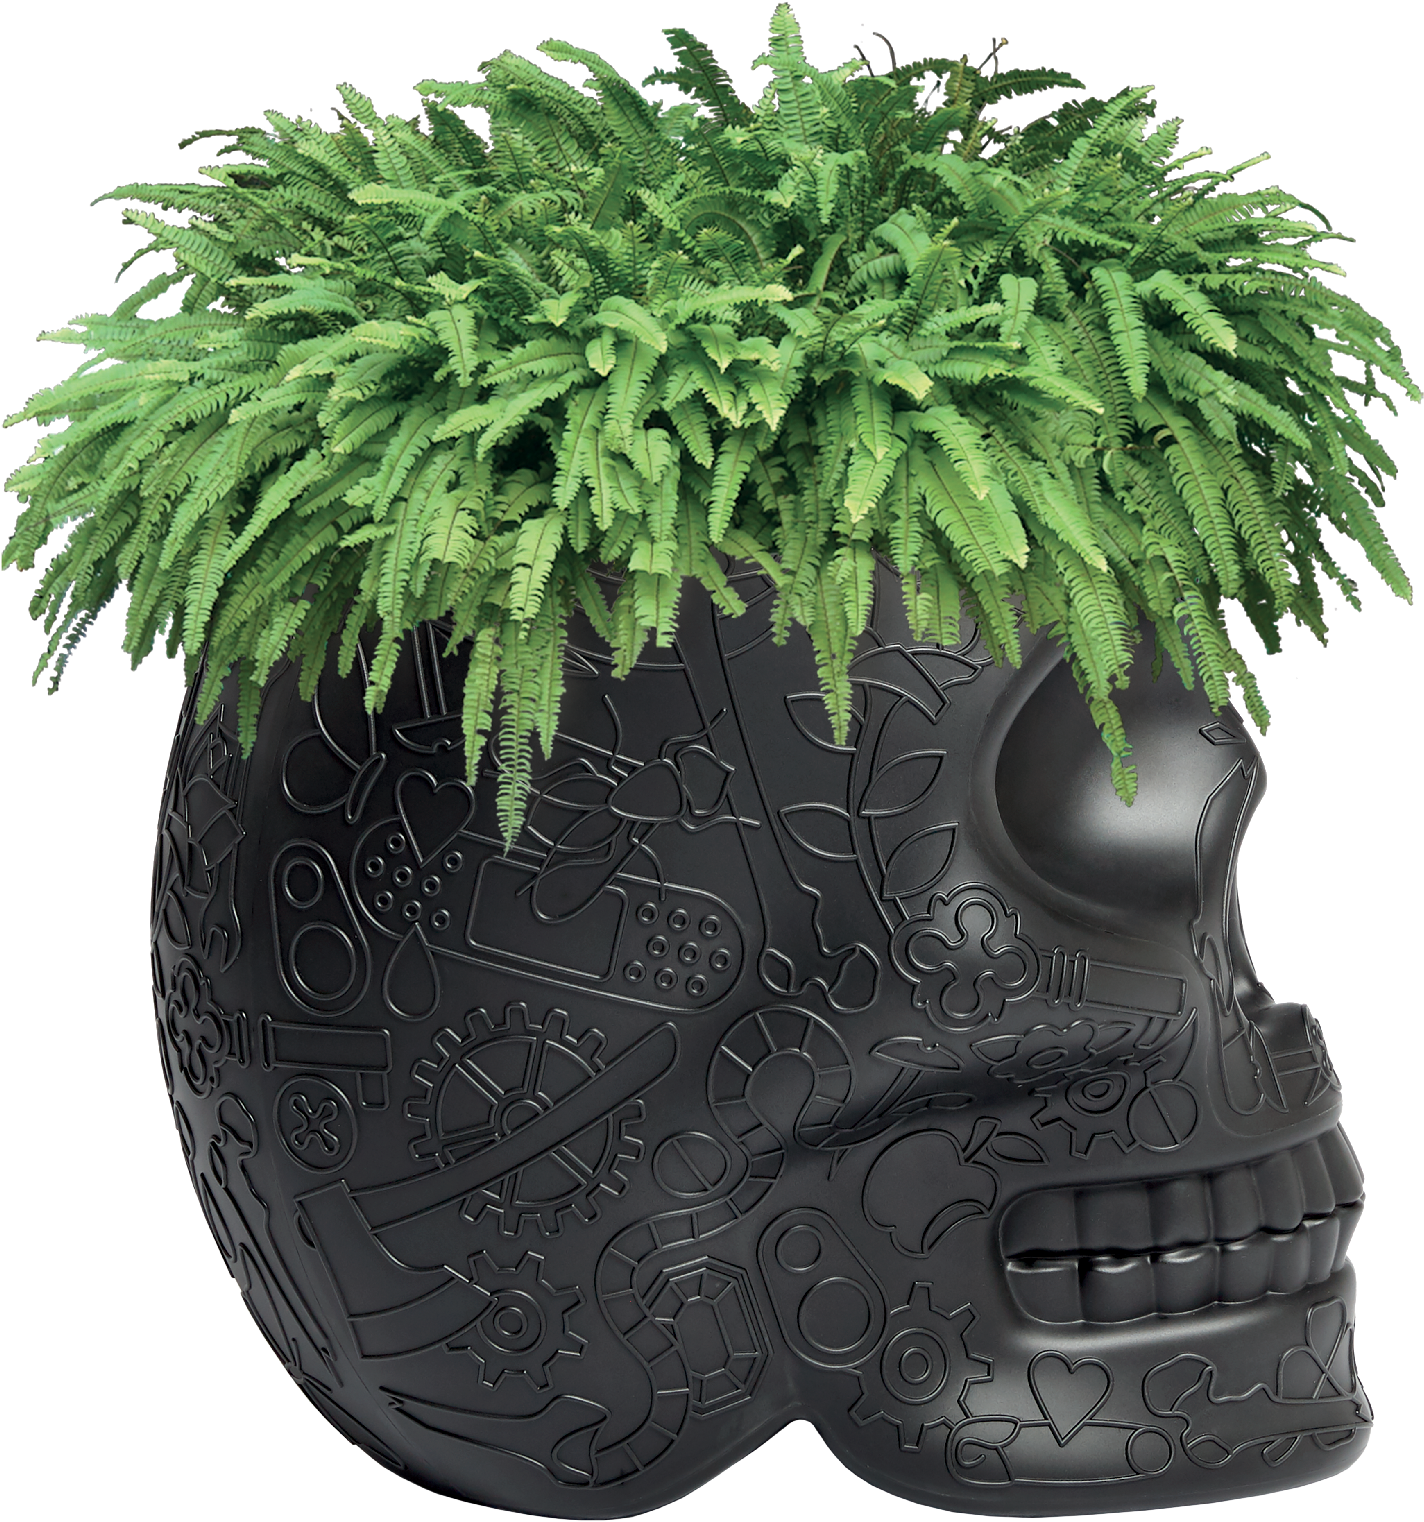 Steampunk Skull Planterwith Ferns